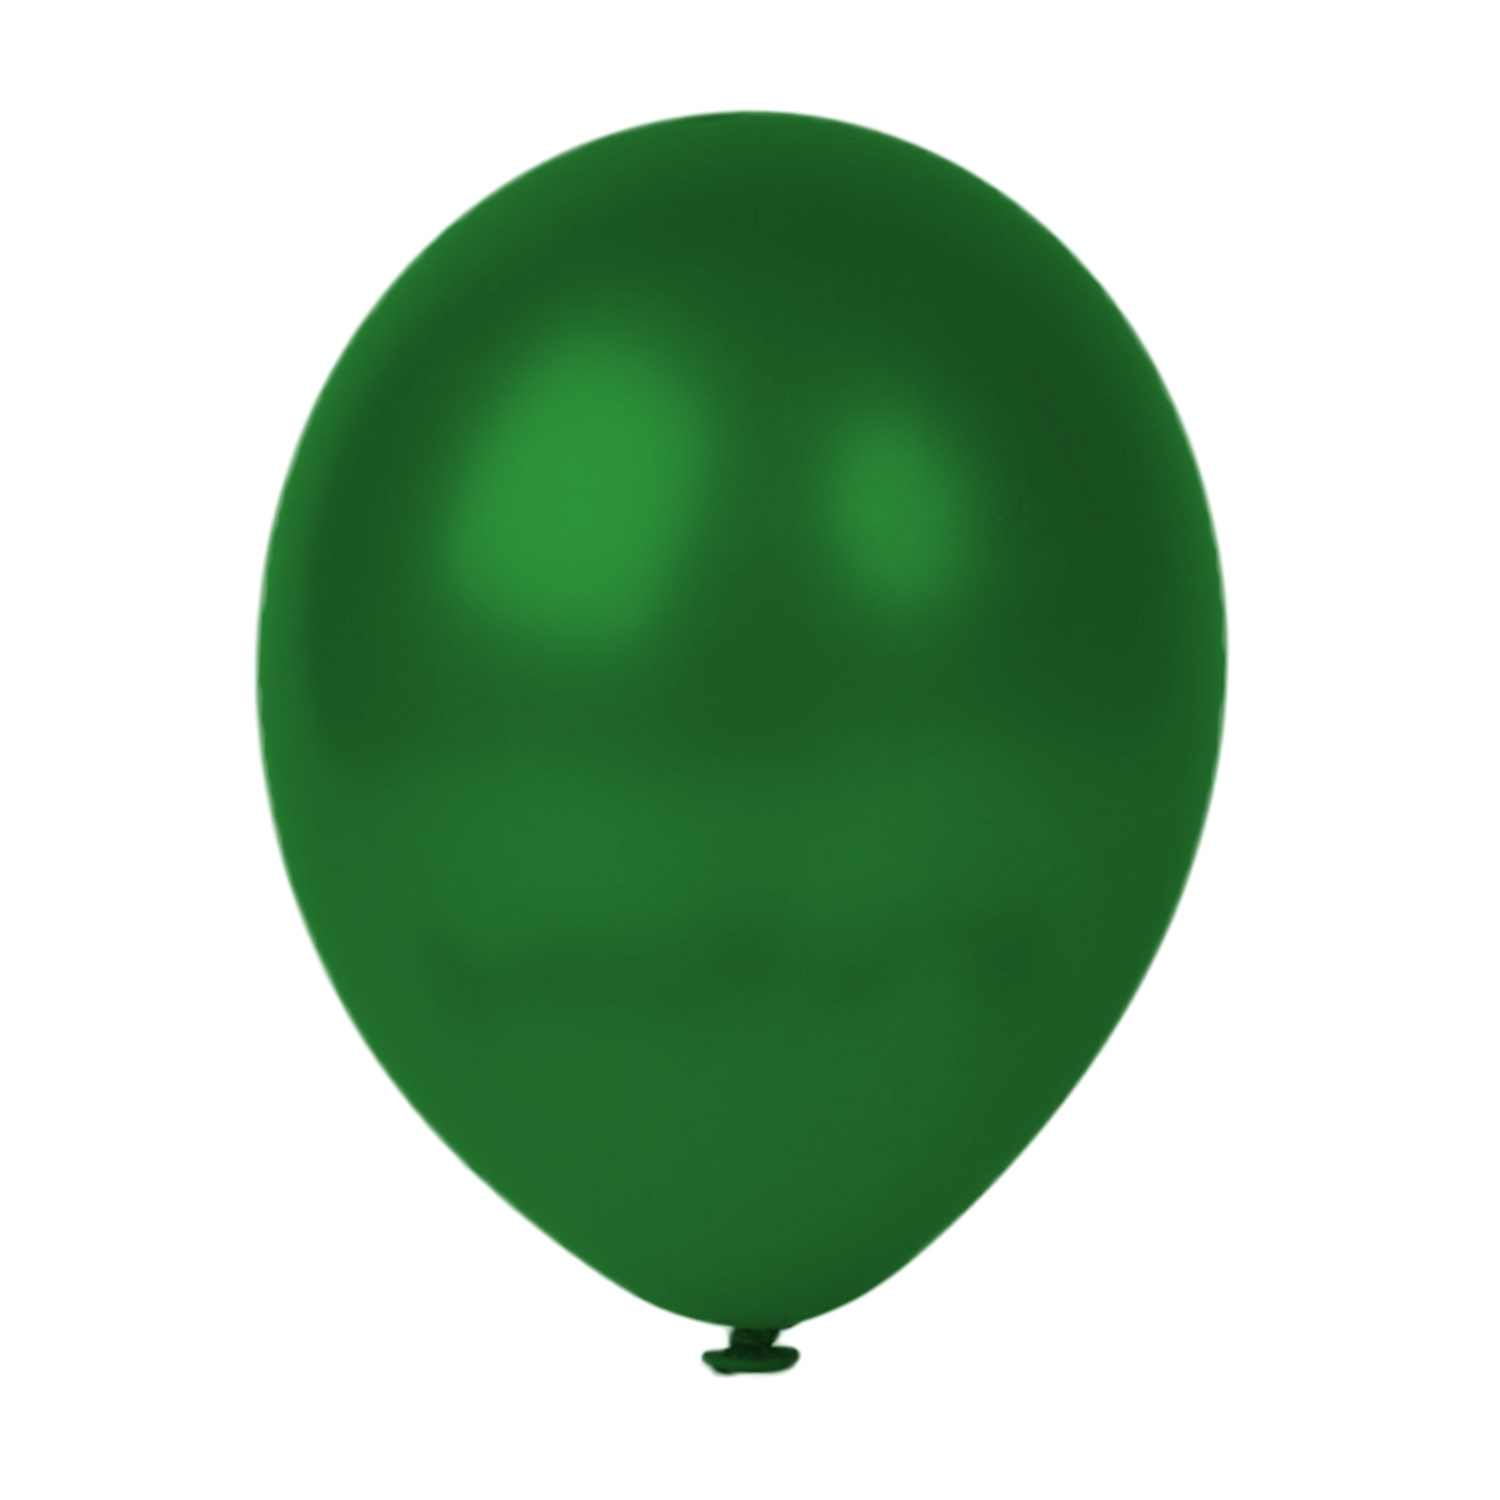 10er SET - Latex Luftballon - 12inch - Grün - Metallic (glänzend)